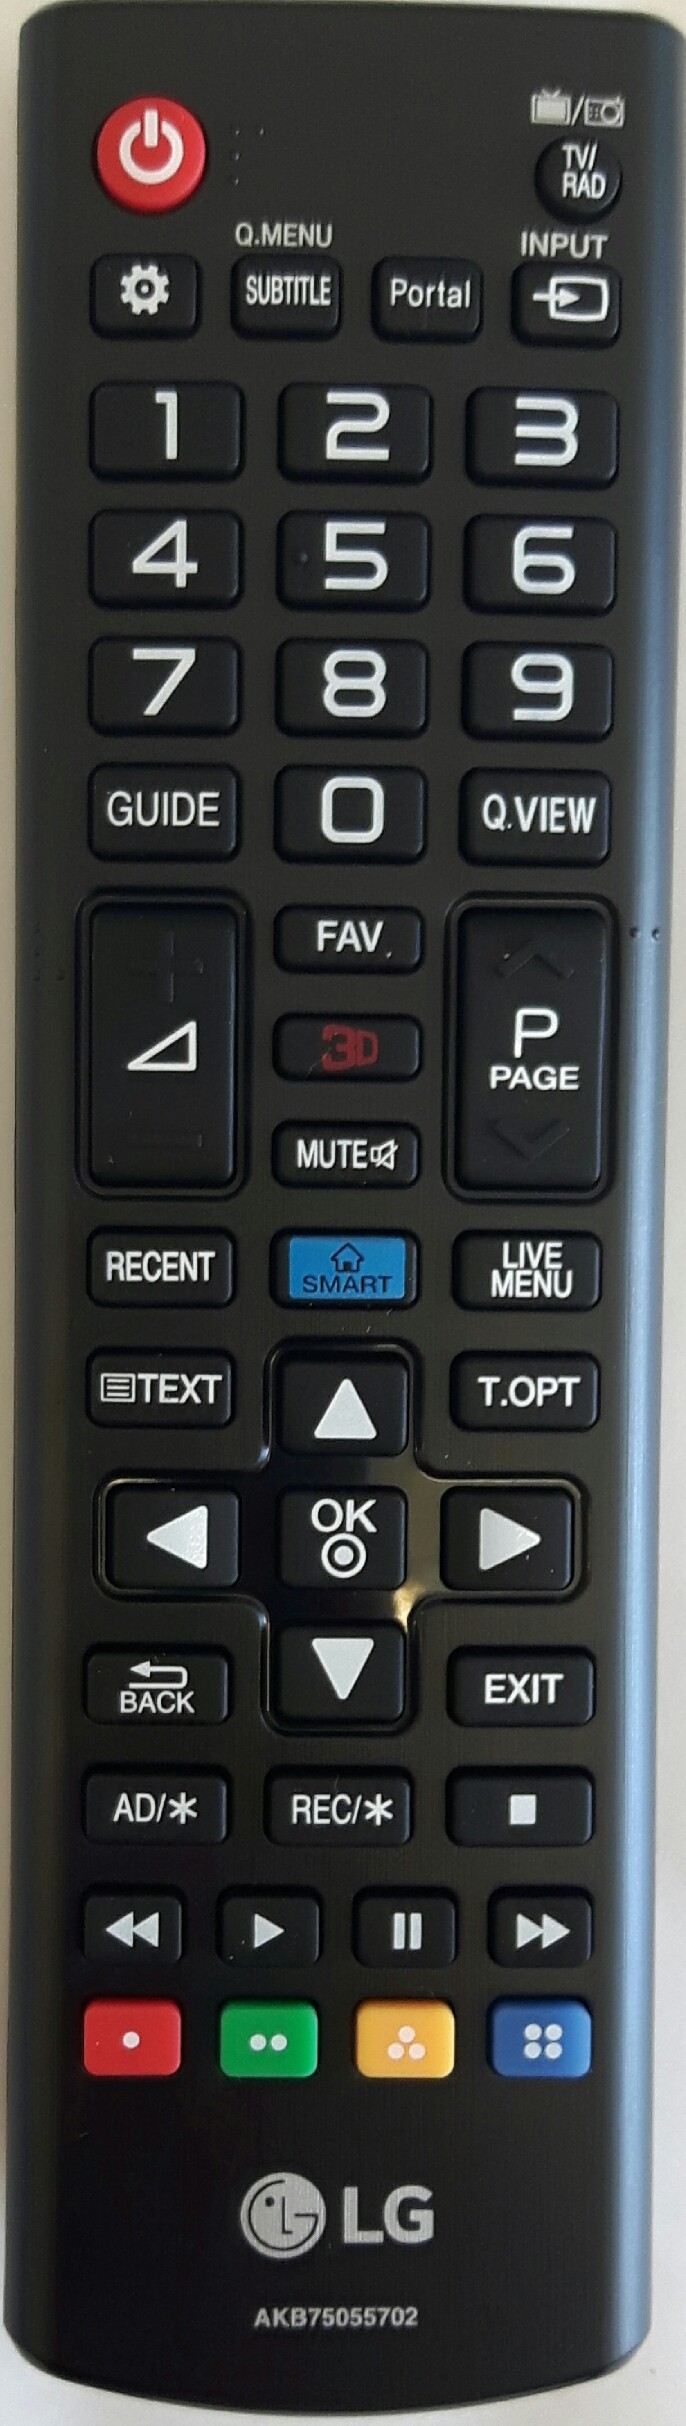 LG 19LE3300 Remote Control Original